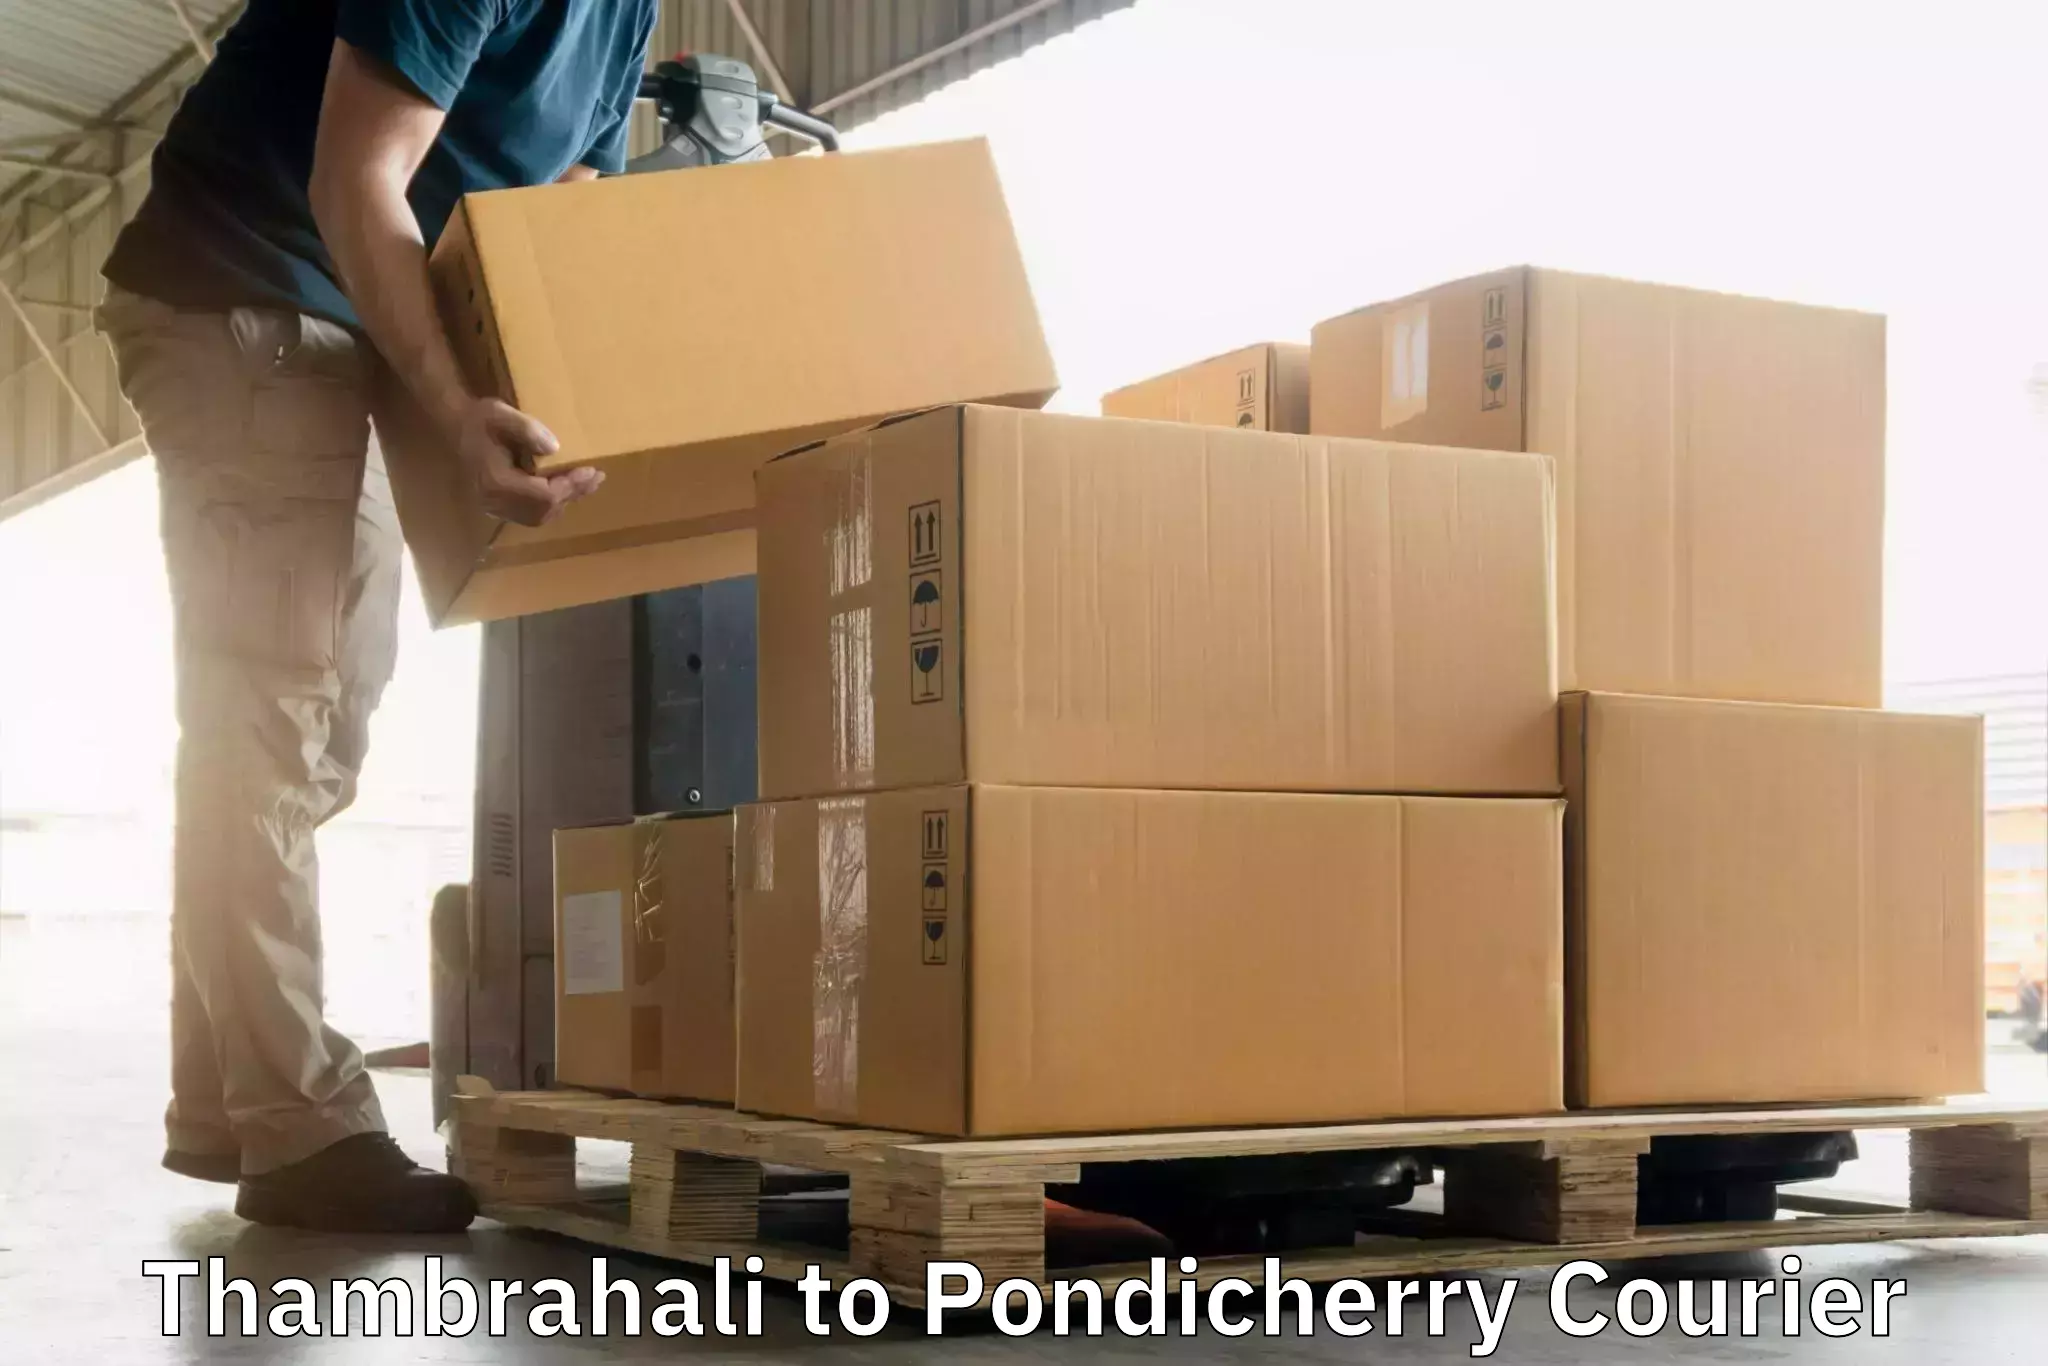 Digital courier platforms Thambrahali to Pondicherry